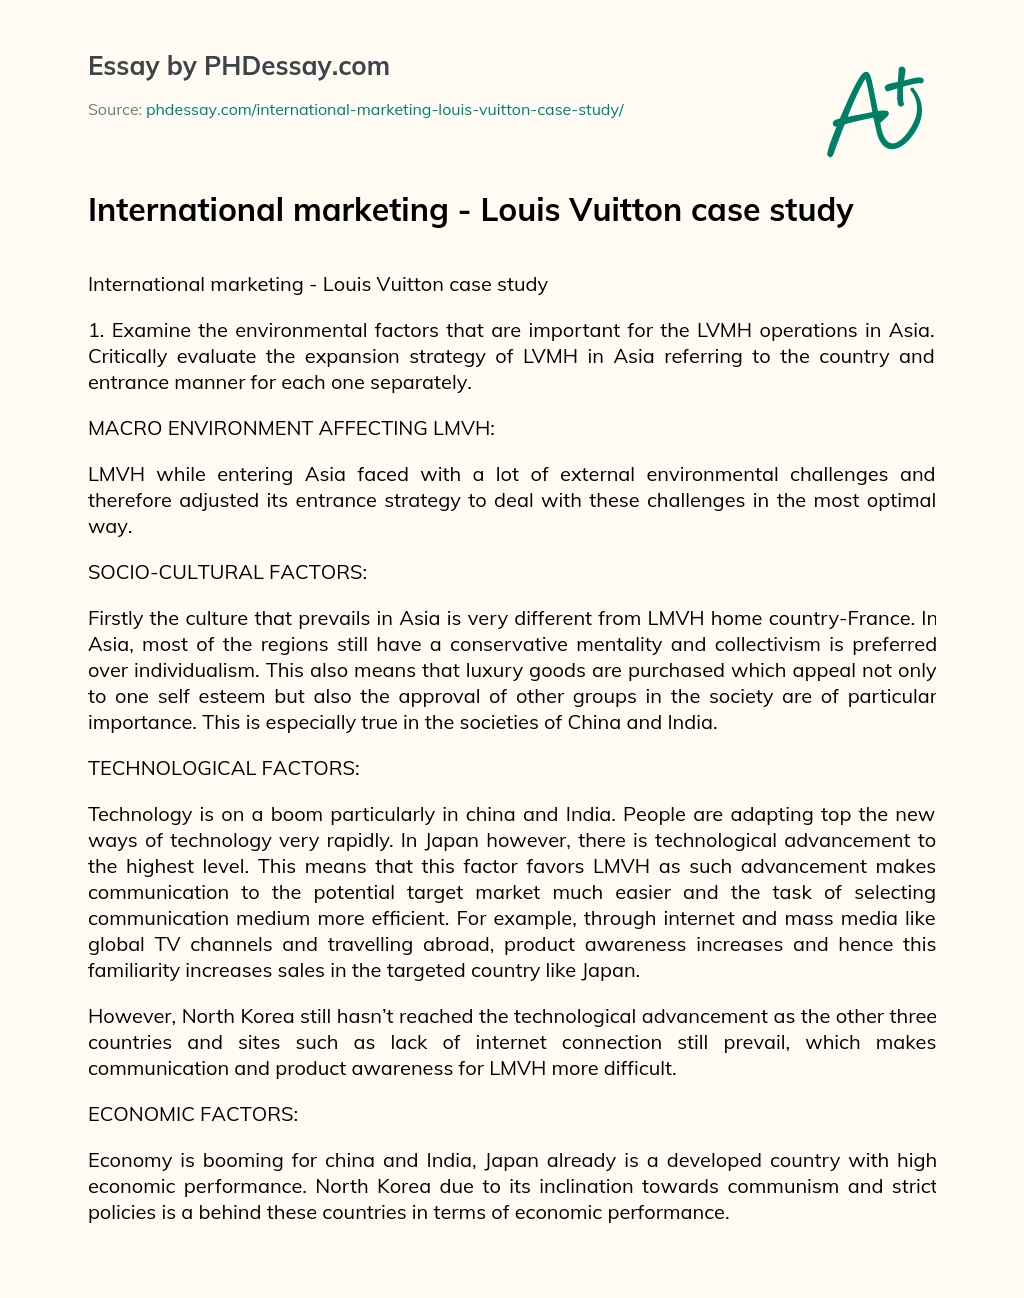 International marketing – Louis Vuitton case study essay